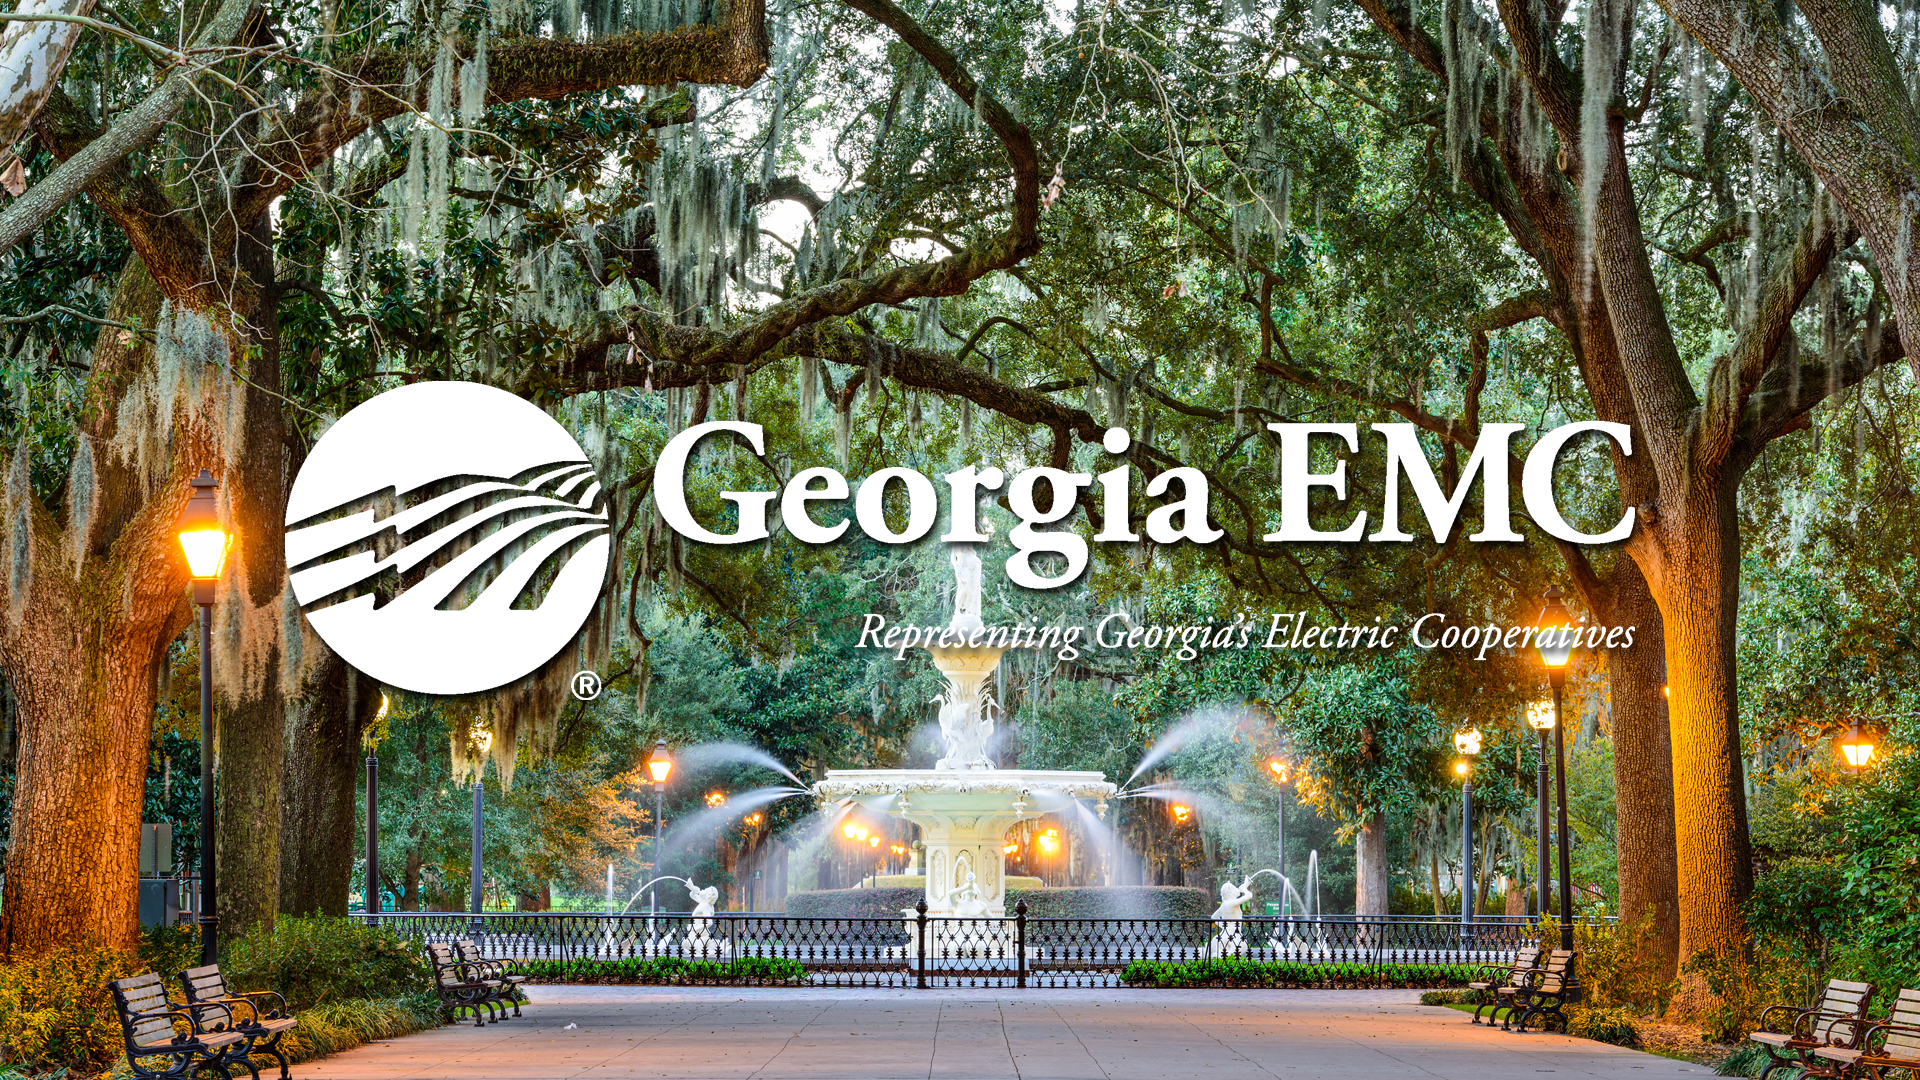 Georgia Electric Membership Corp. Annual Meeting, Savannah, GA